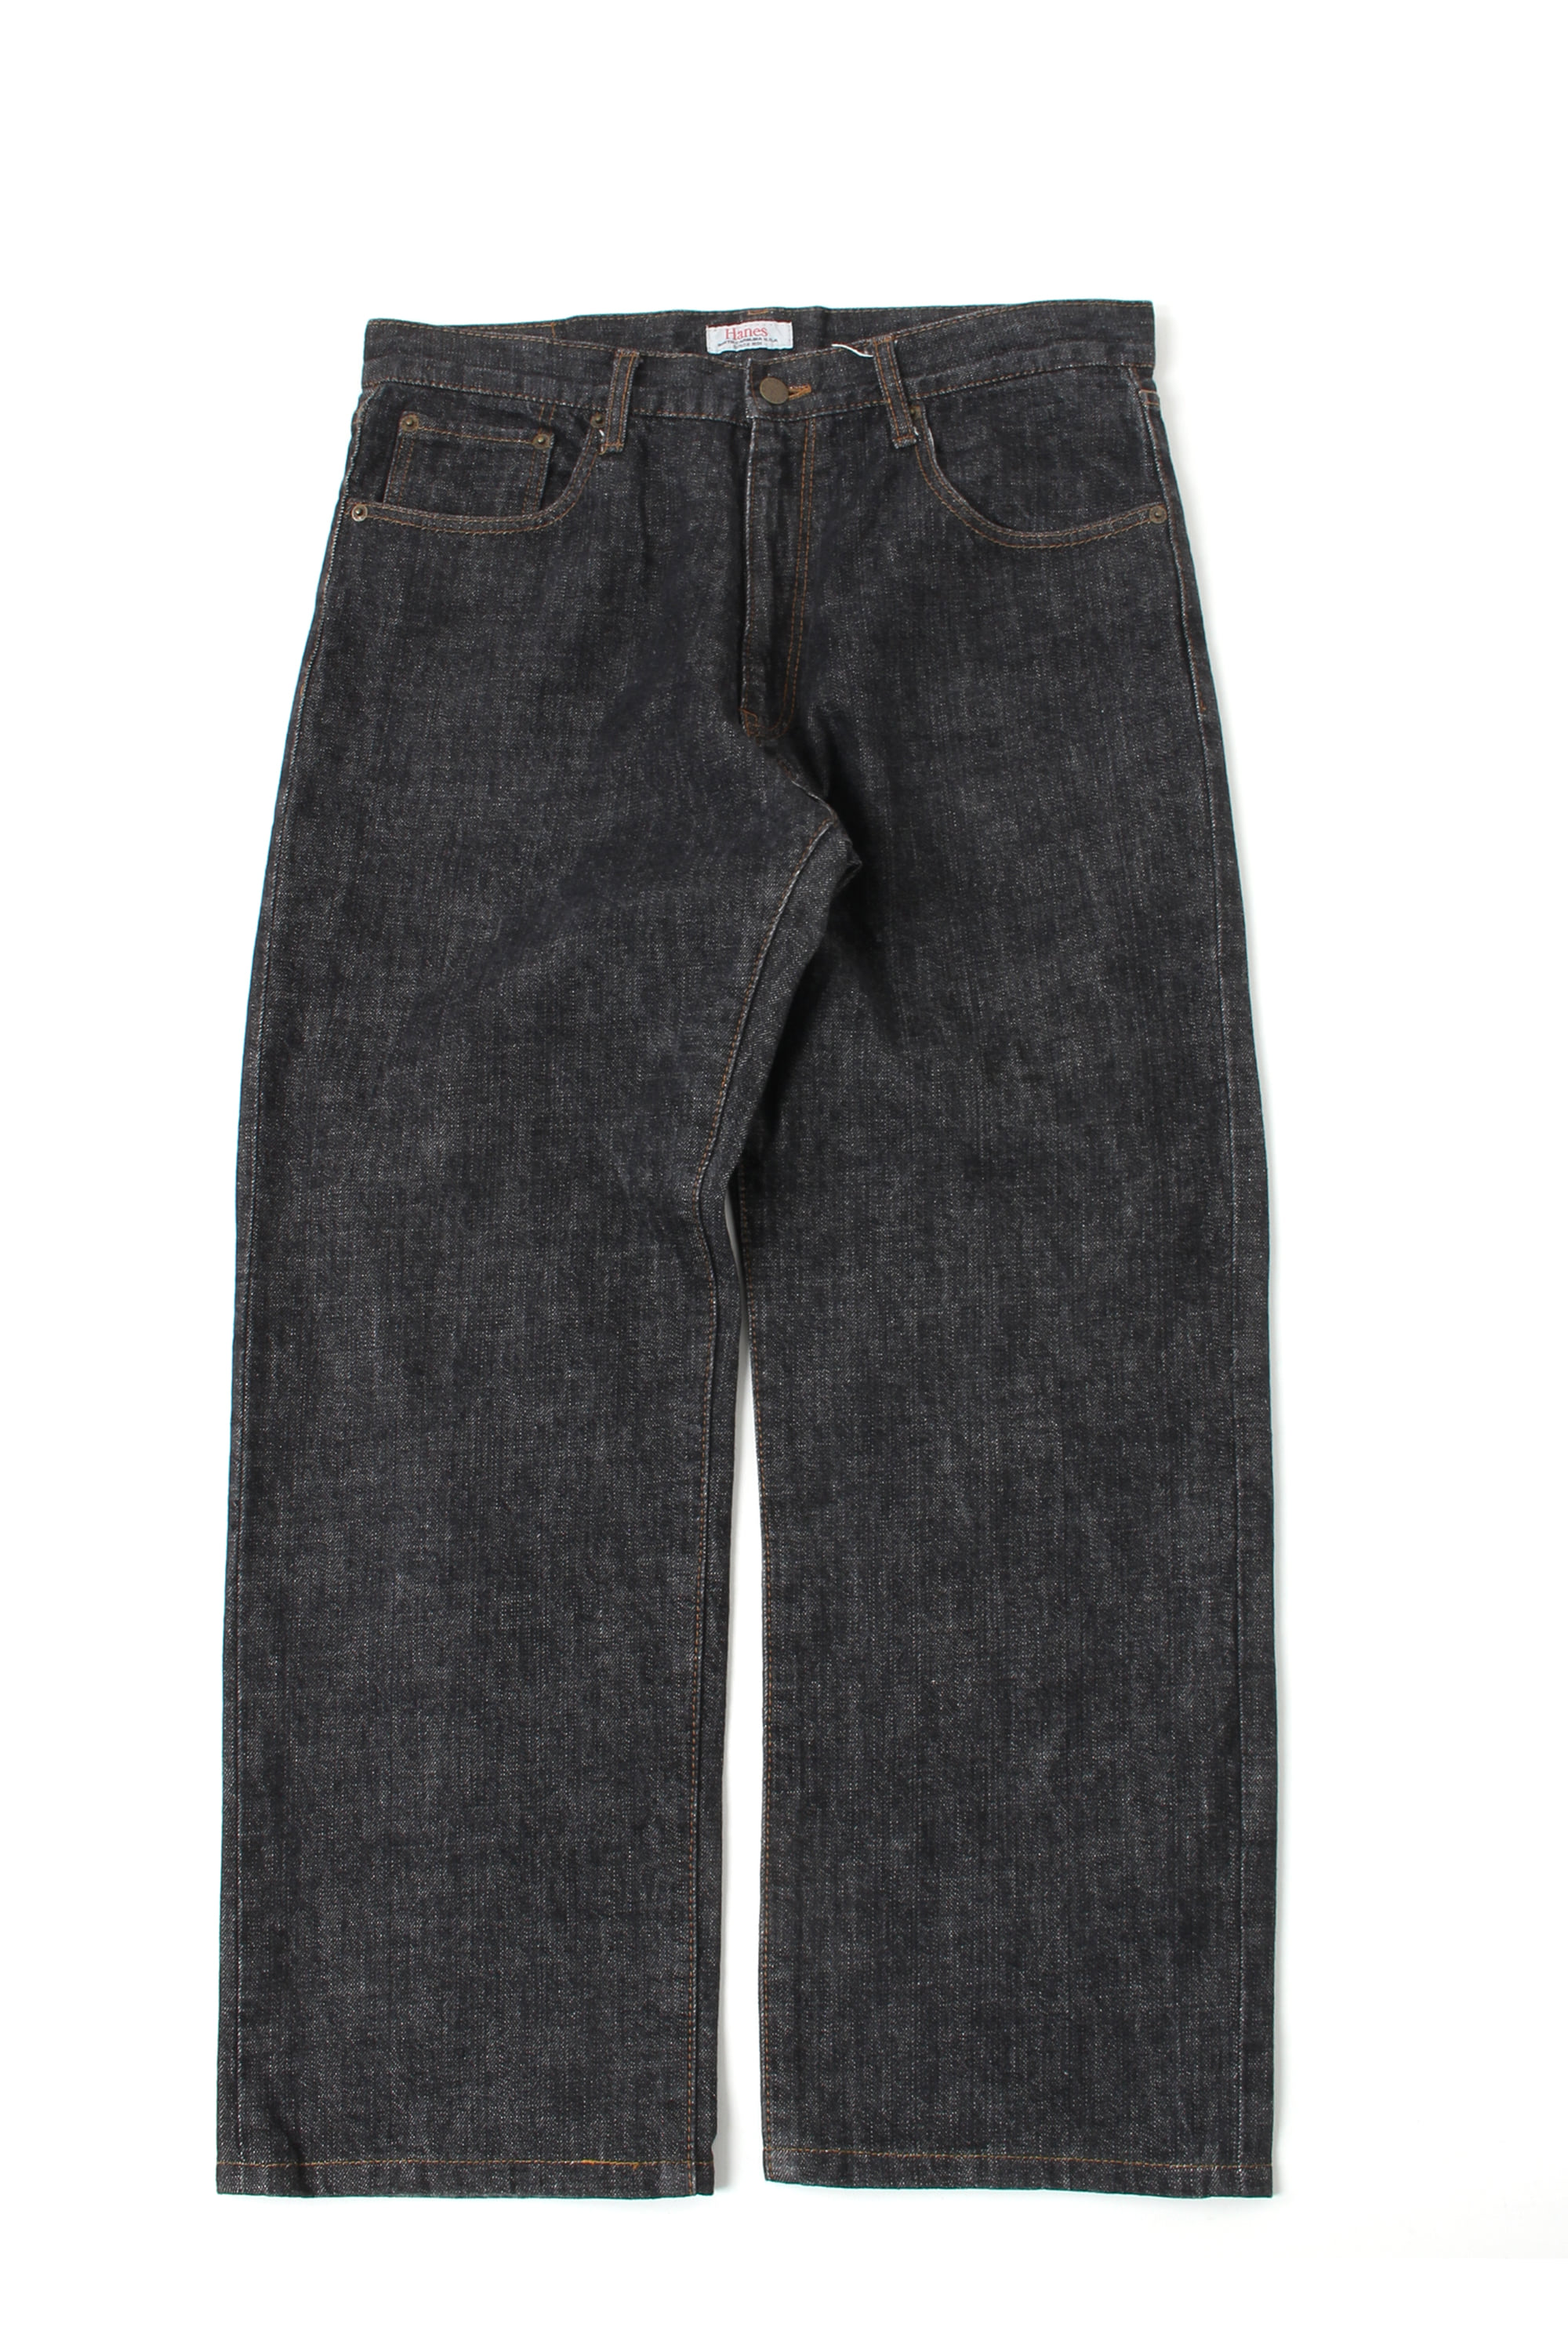 Hanes Jeans(91)